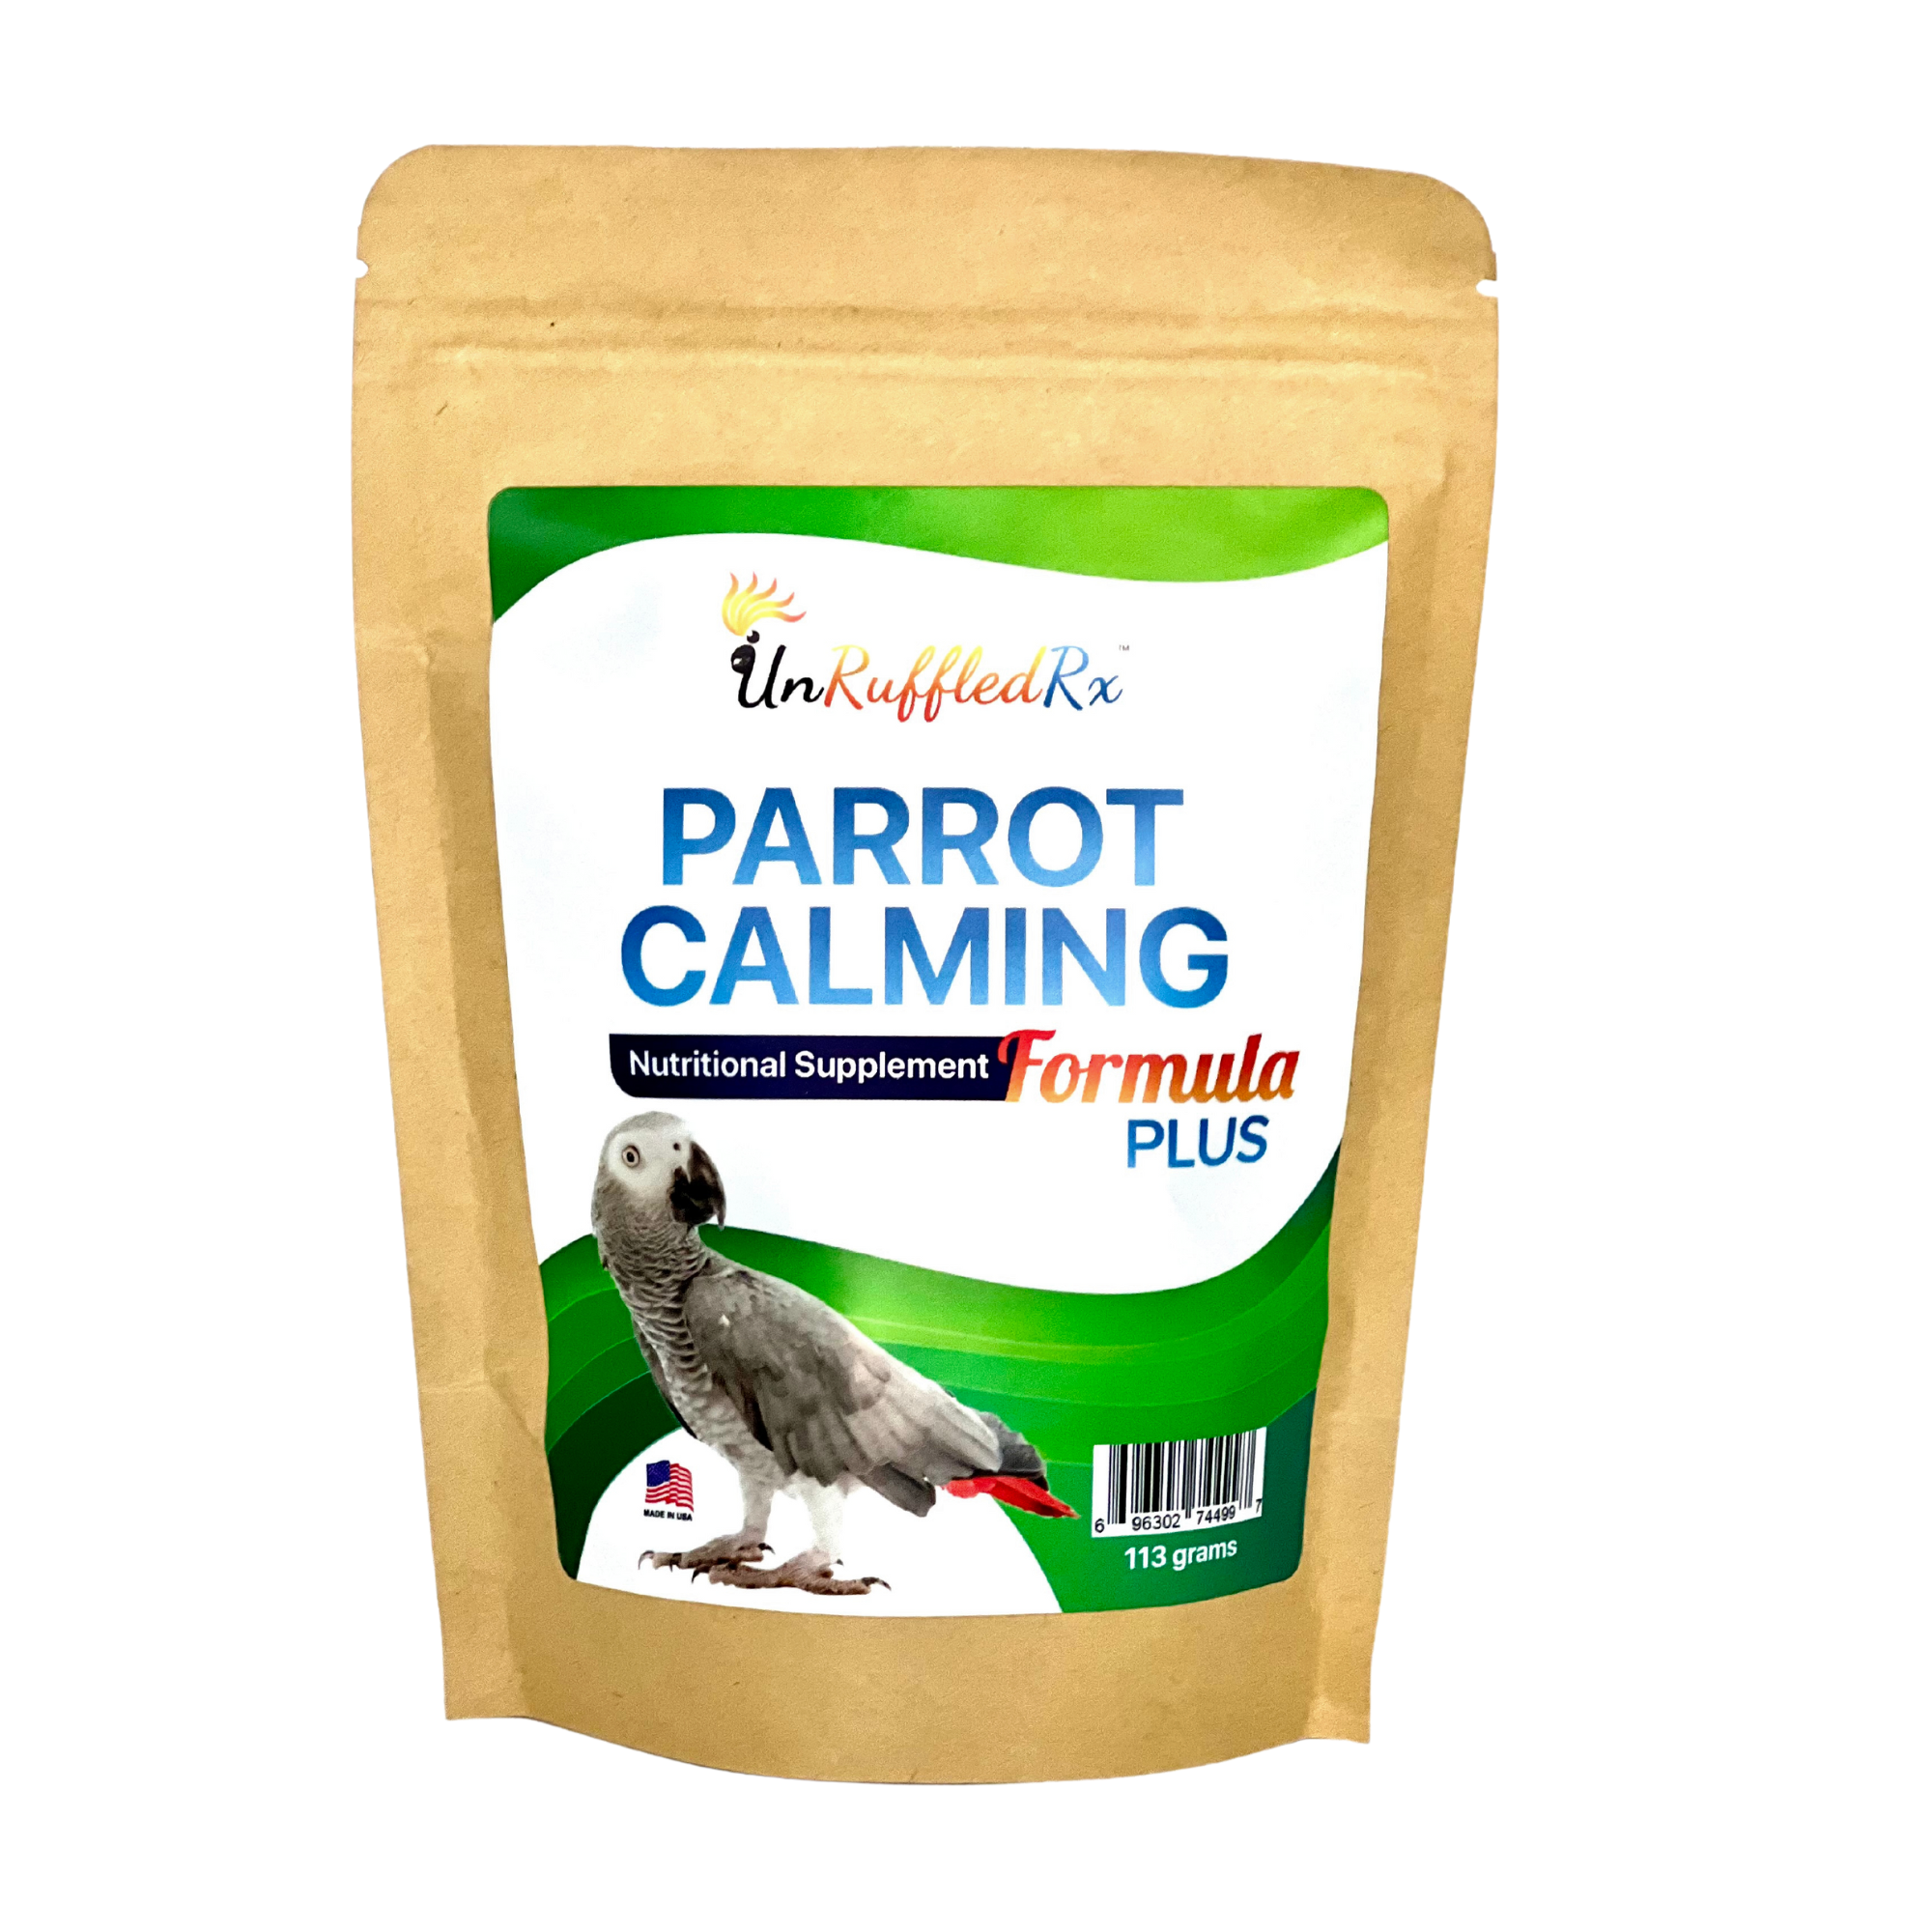 UnRuffledRx Parrot Calming Formula: Supplement for Bird Anxiety